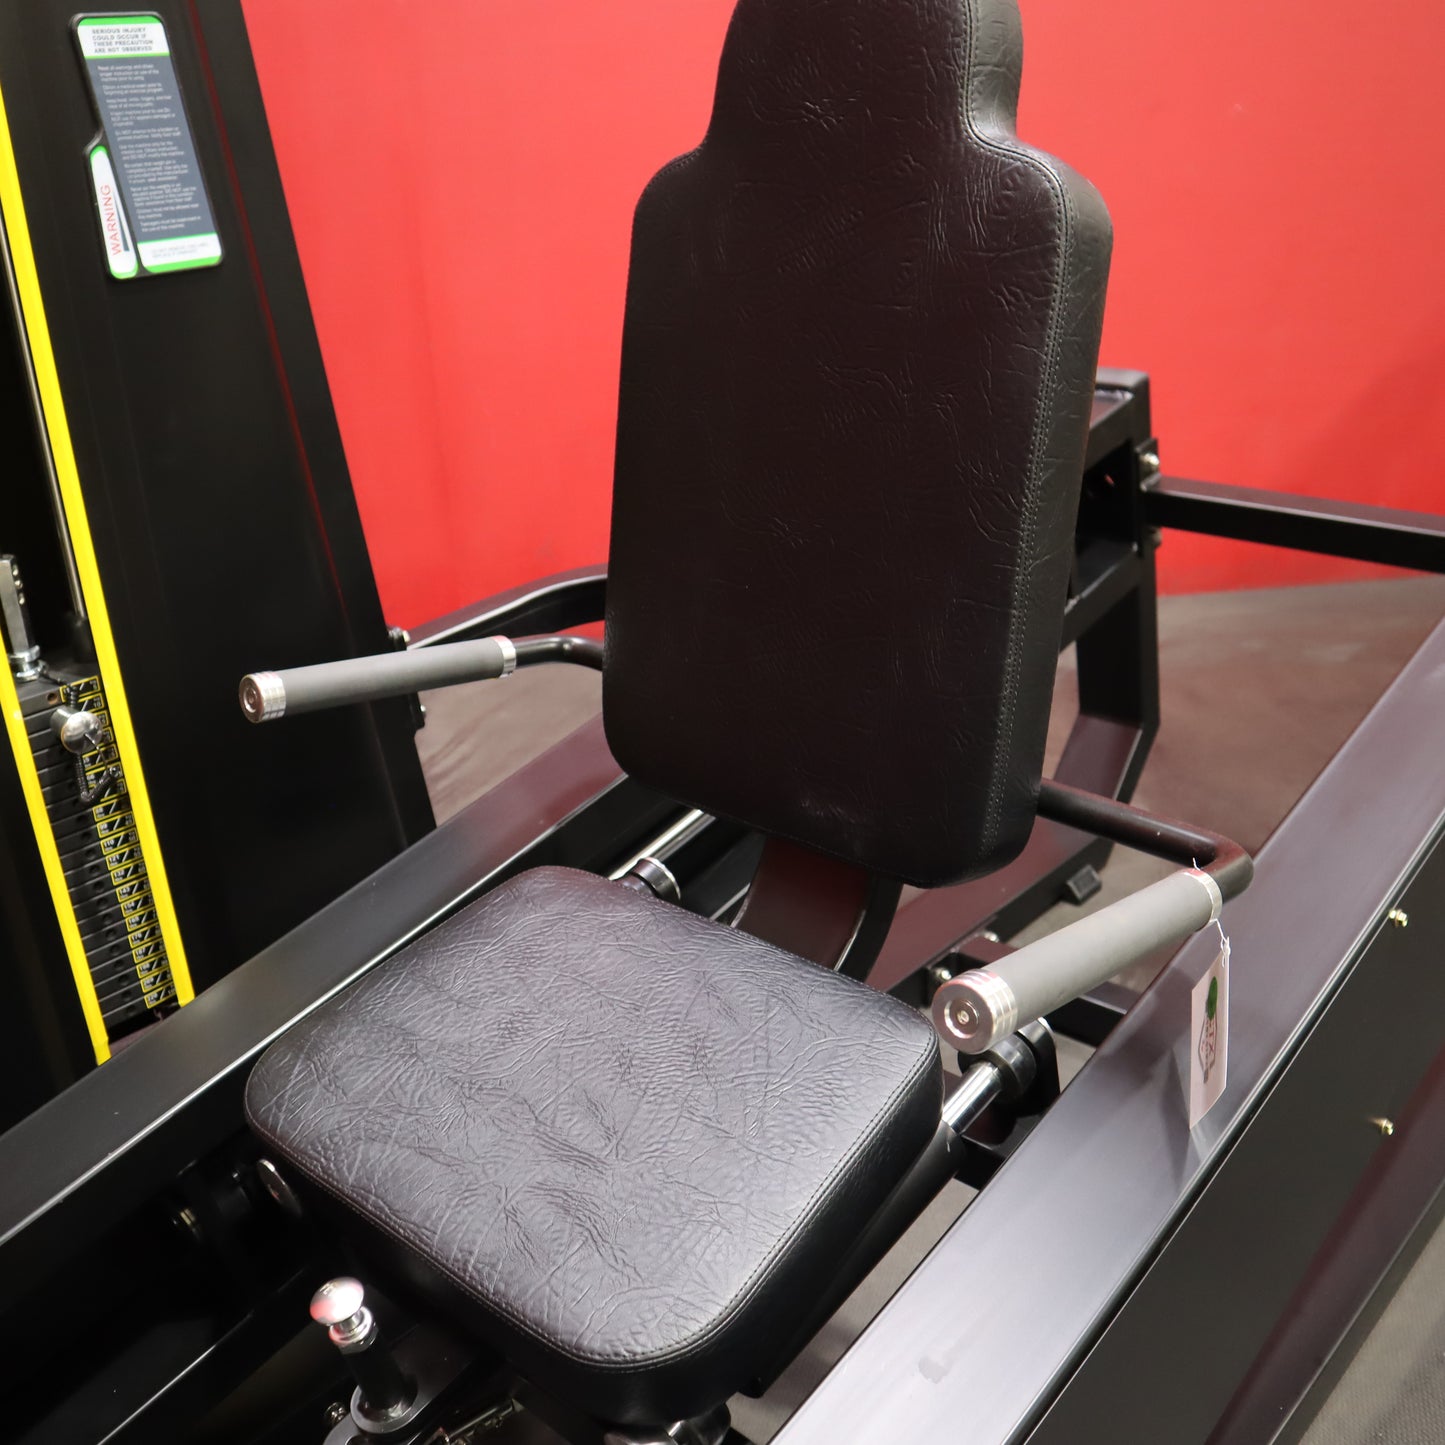 Fettle Fitness Selectorized Seated Leg Press (Nuevo)